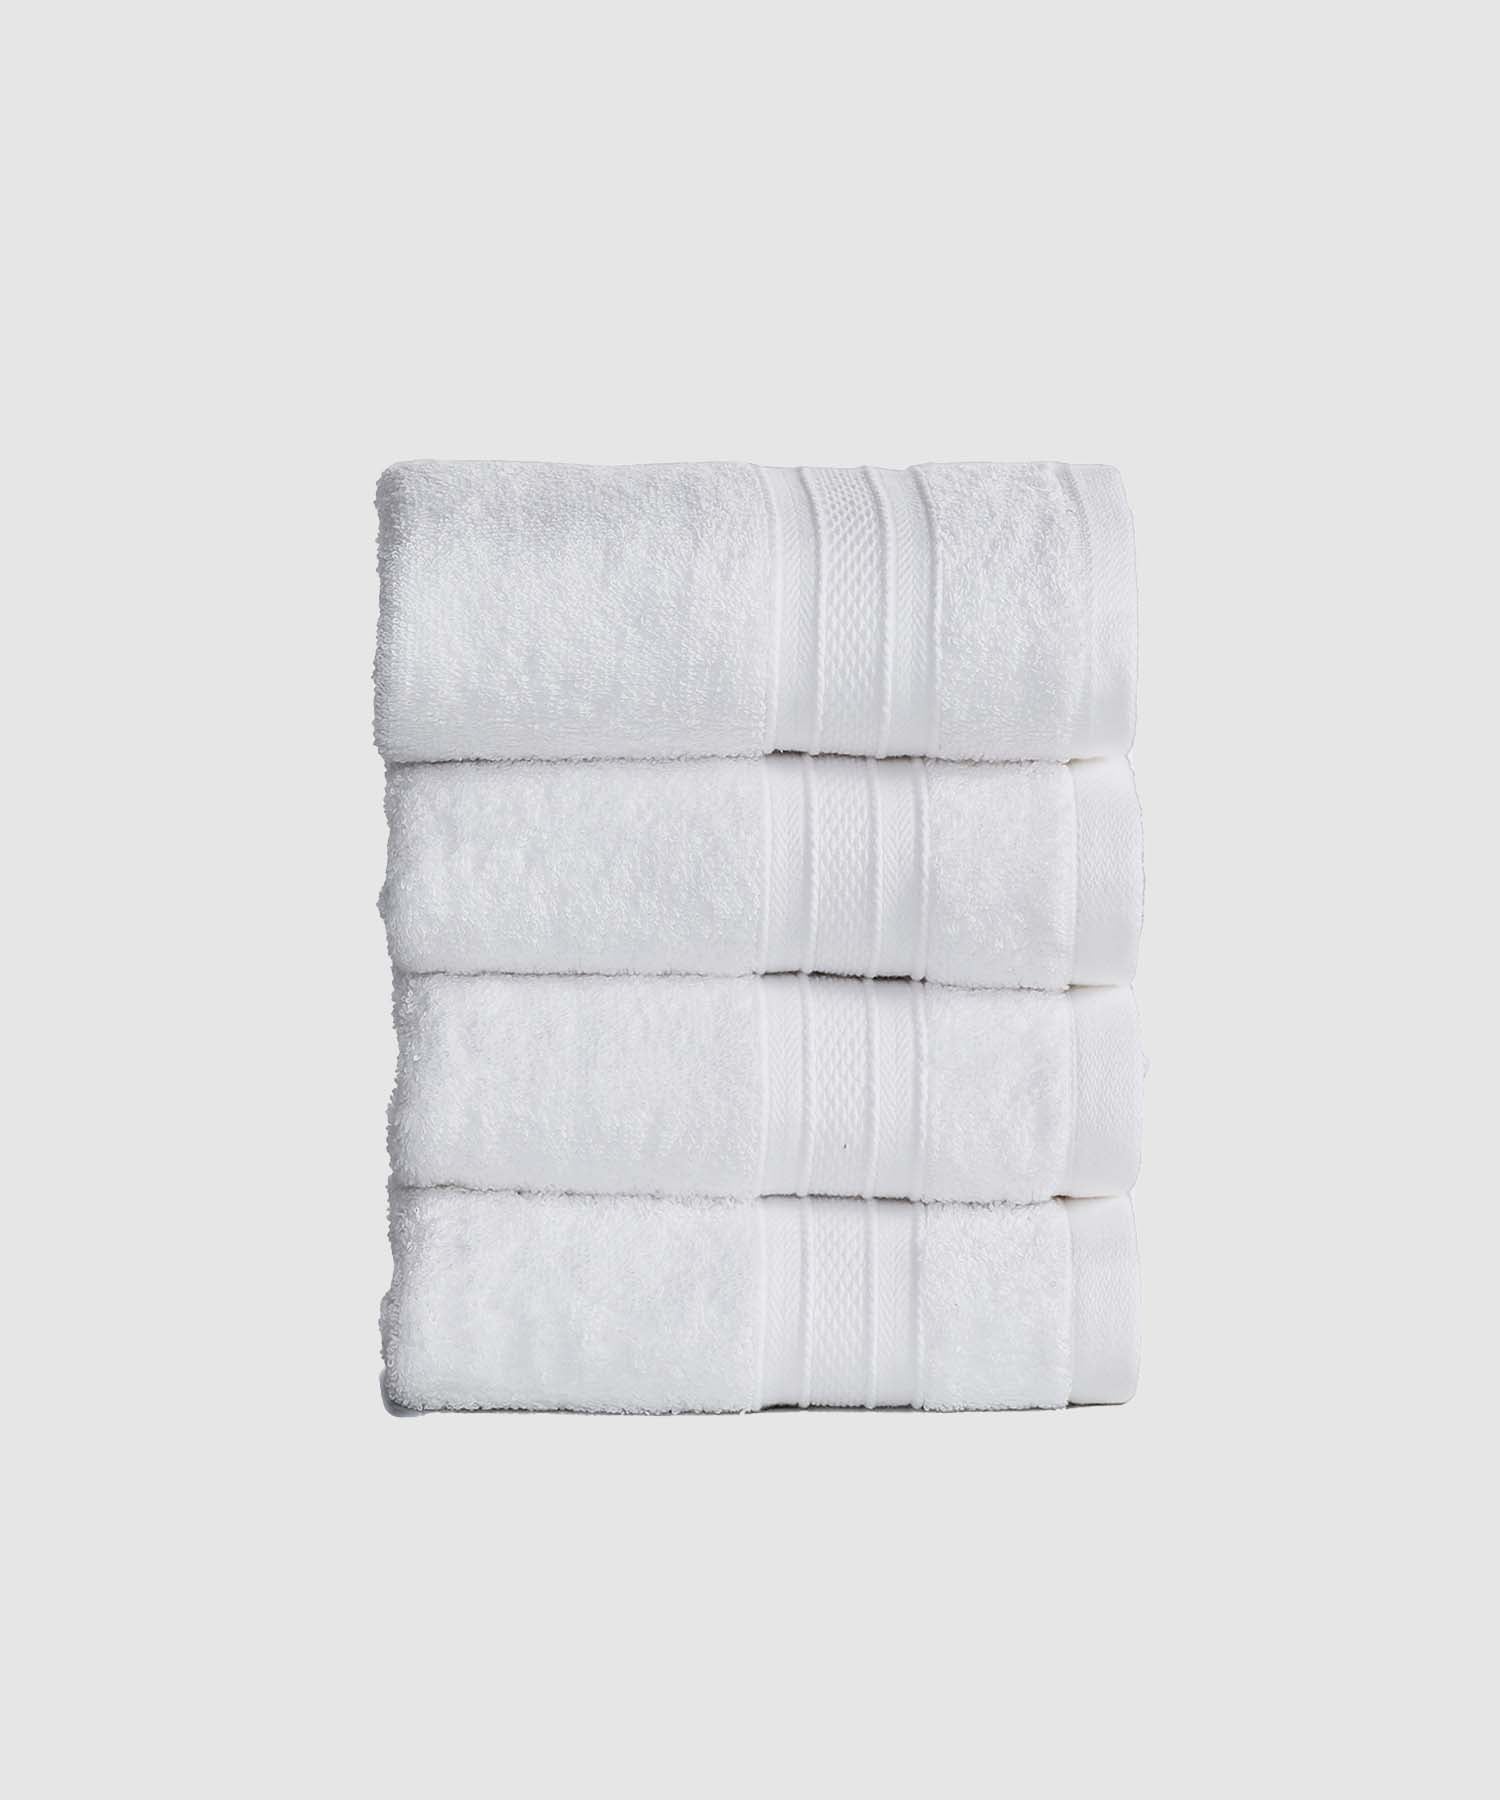 4 Pieces Hand Towel ₹499/-